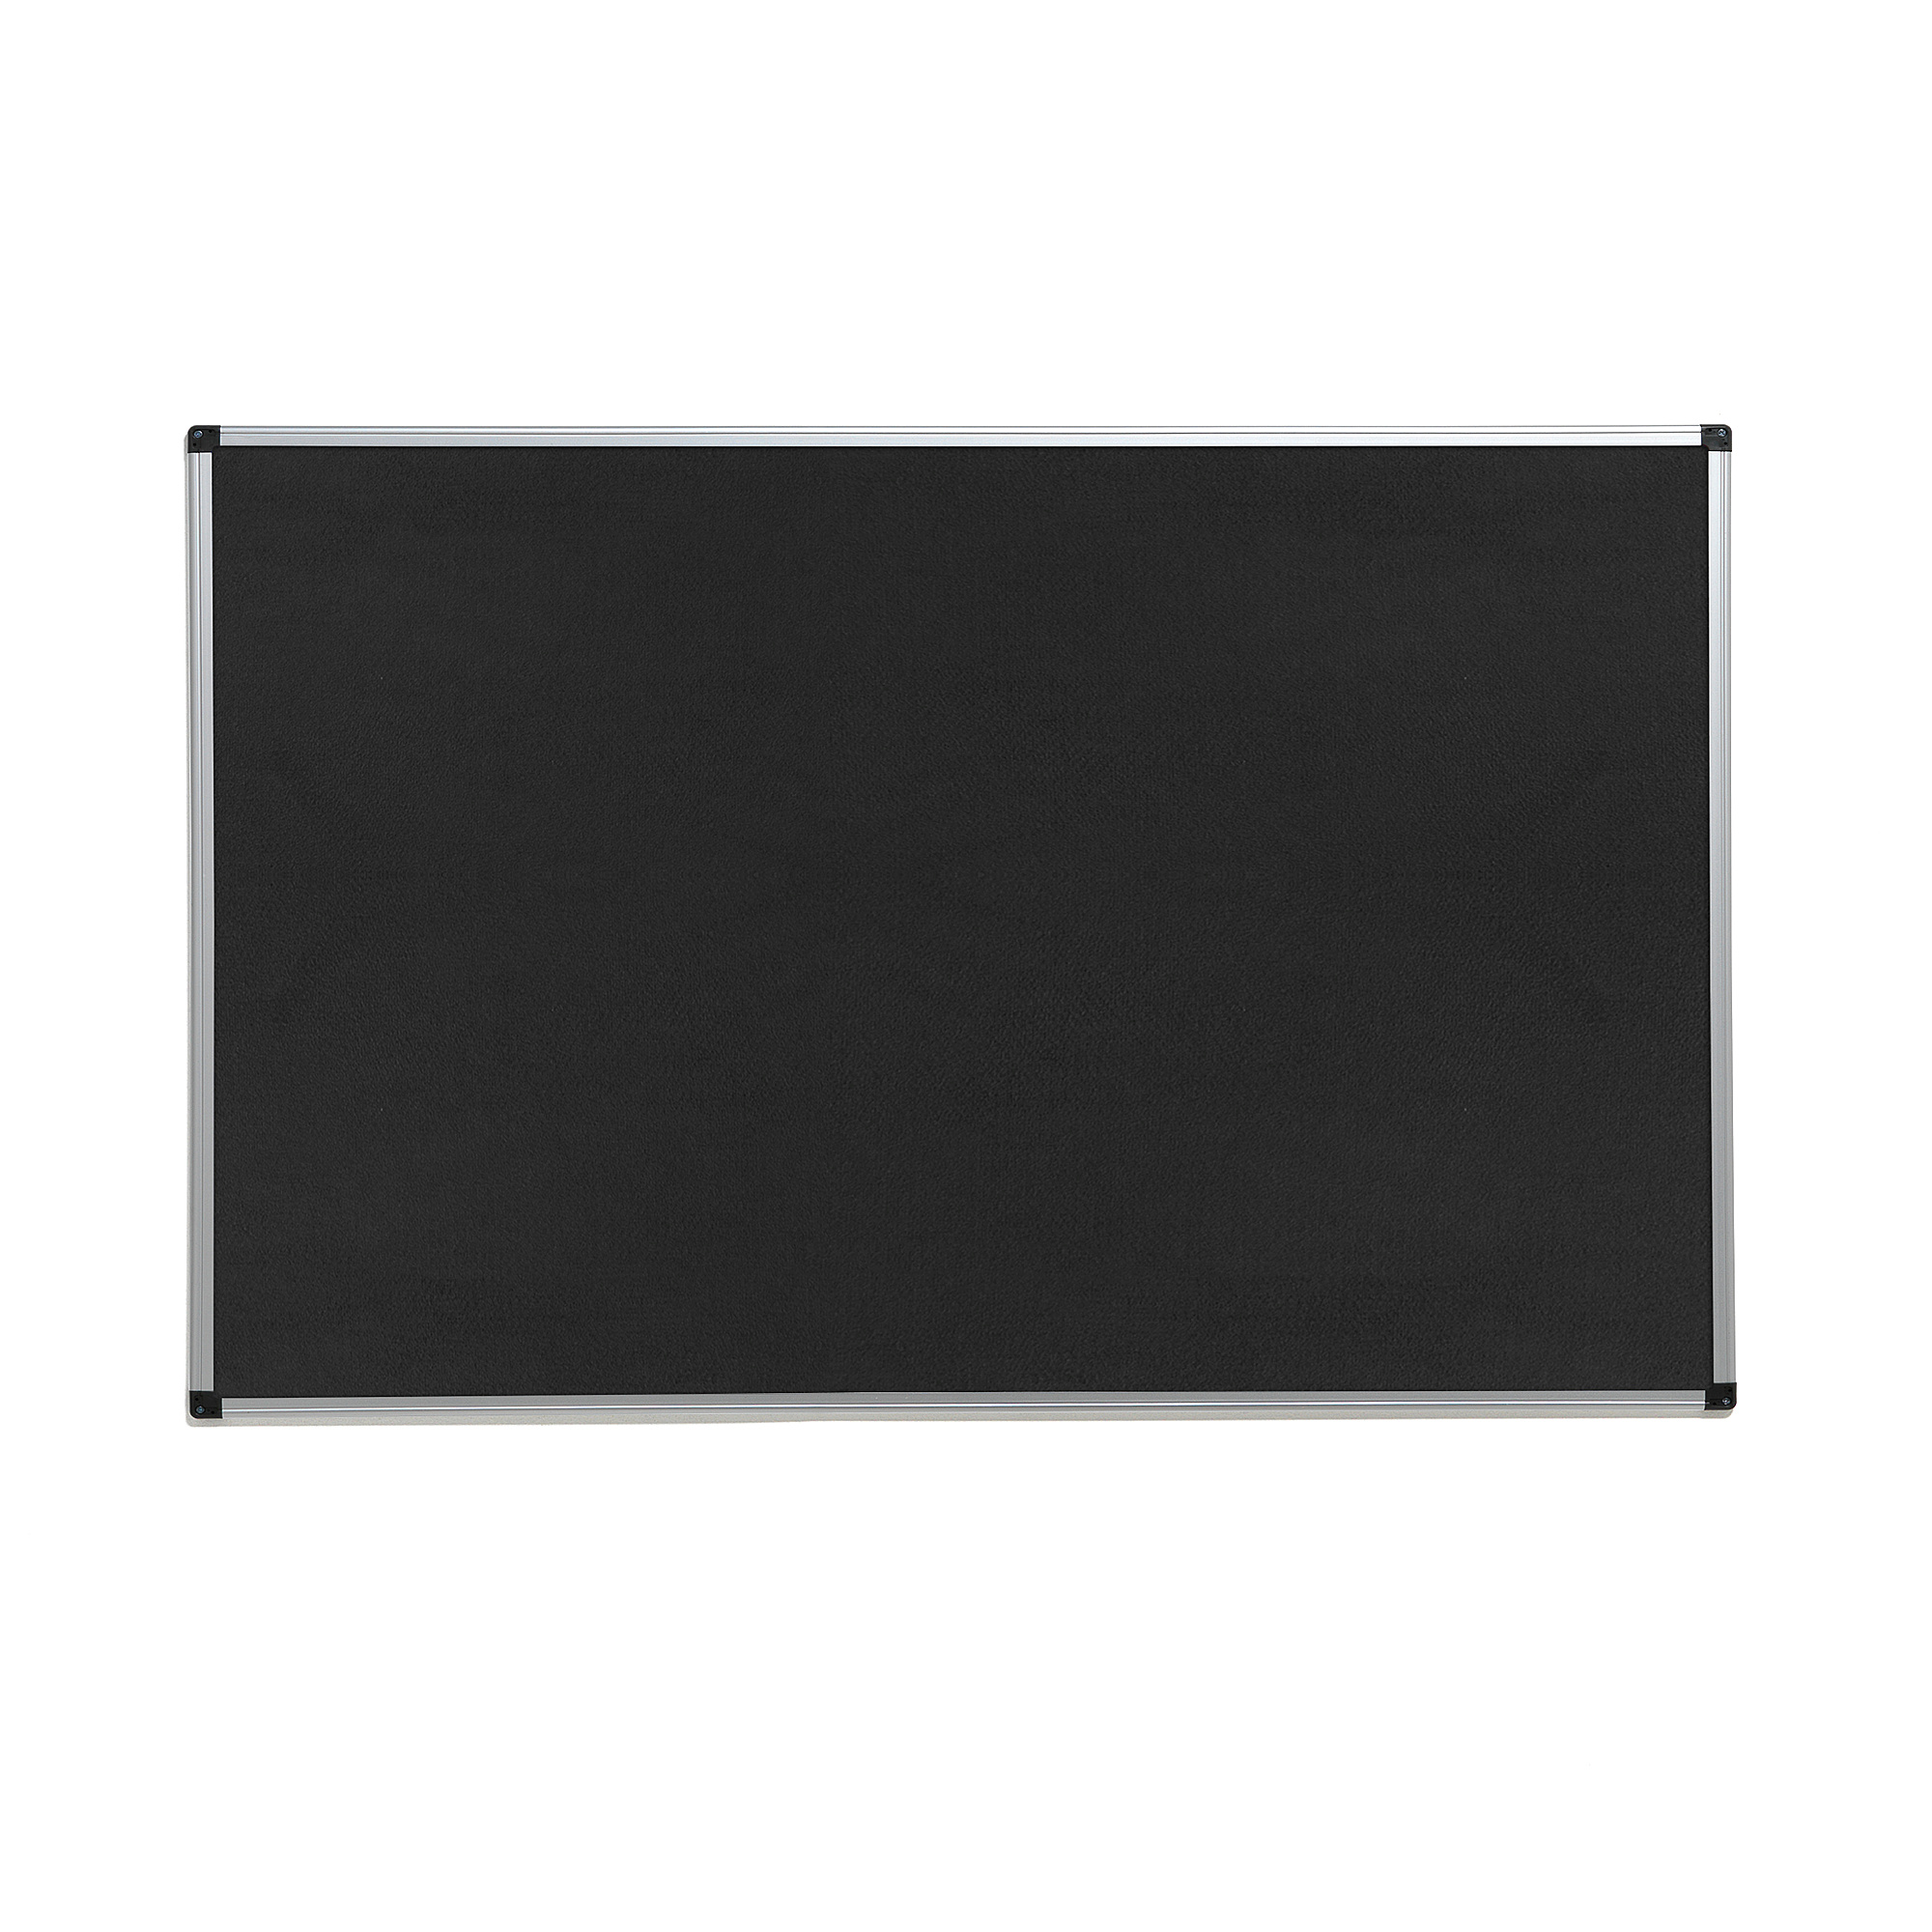 Nástěnka MARIA, 2000x1200 mm, černá, hliníkový rám